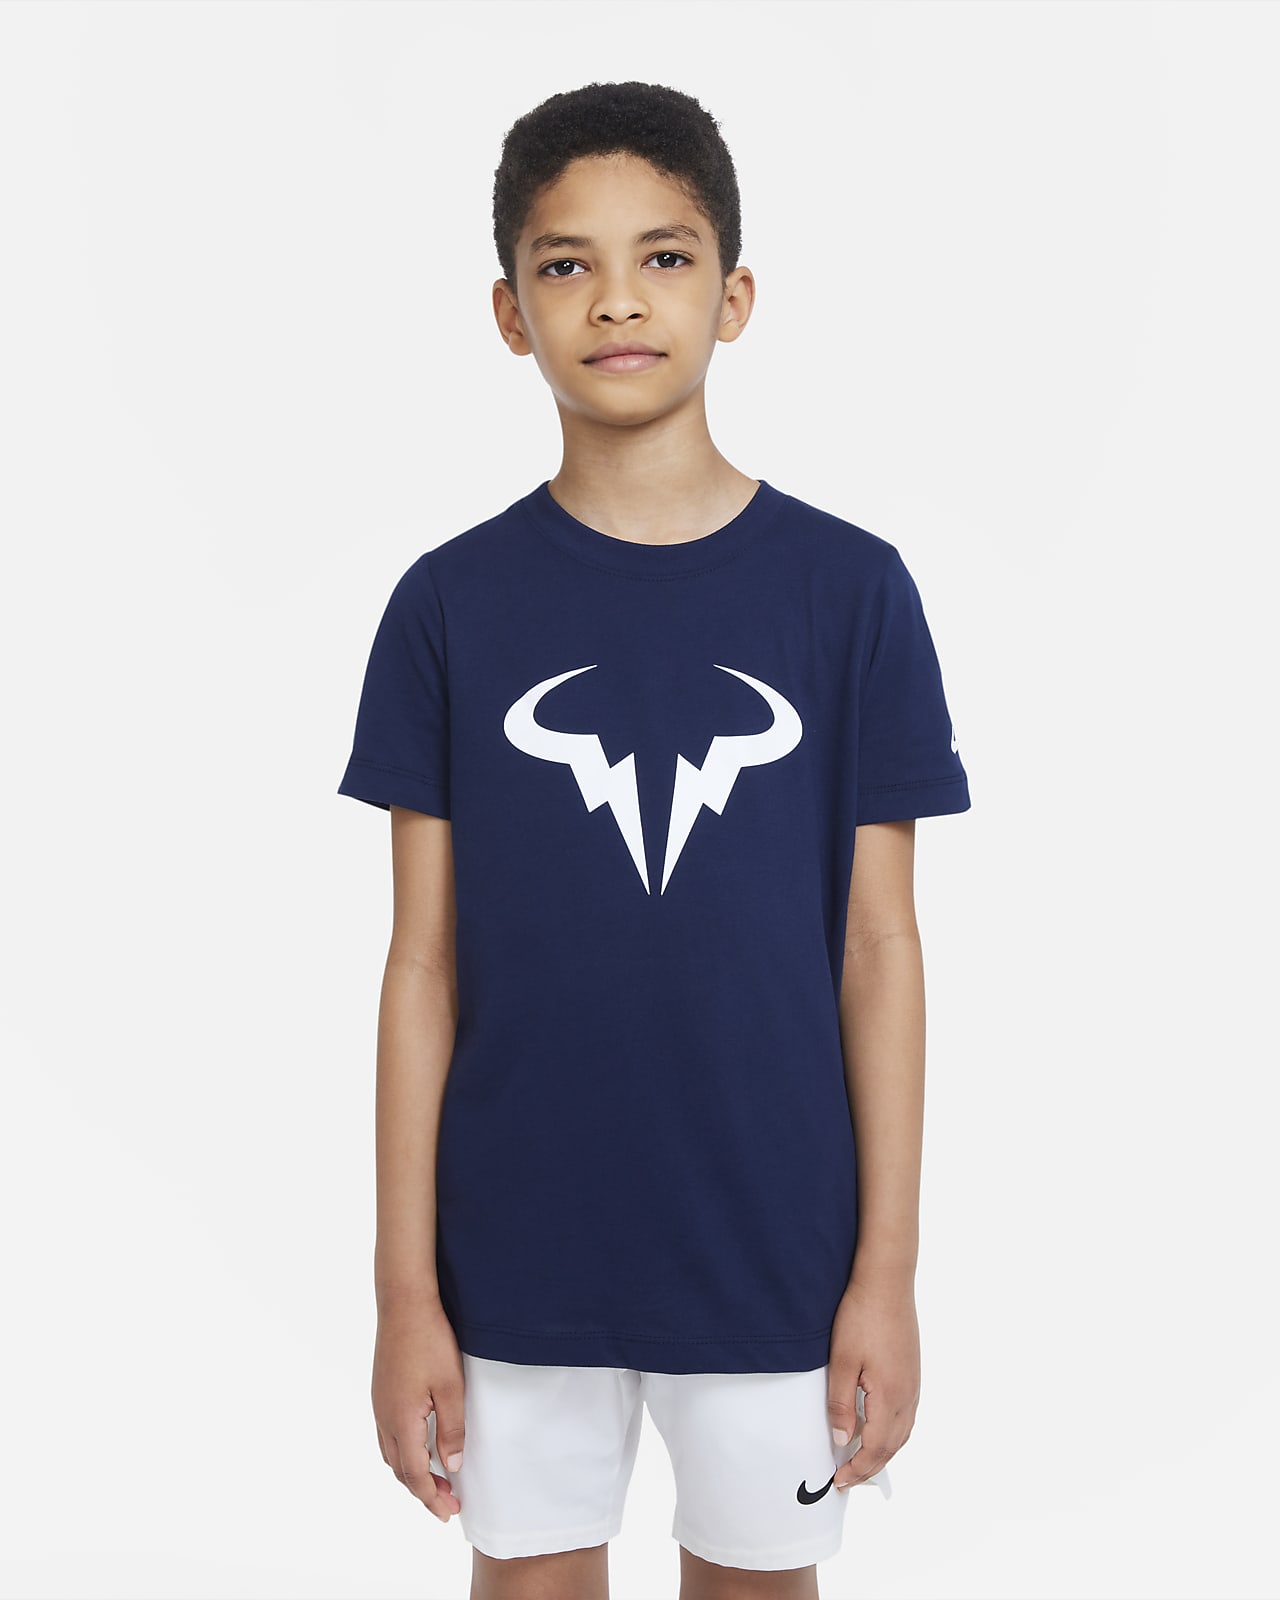 Теннисная футболка для мальчиков школьного возраста NikeCourt Dri-FIT Rafa